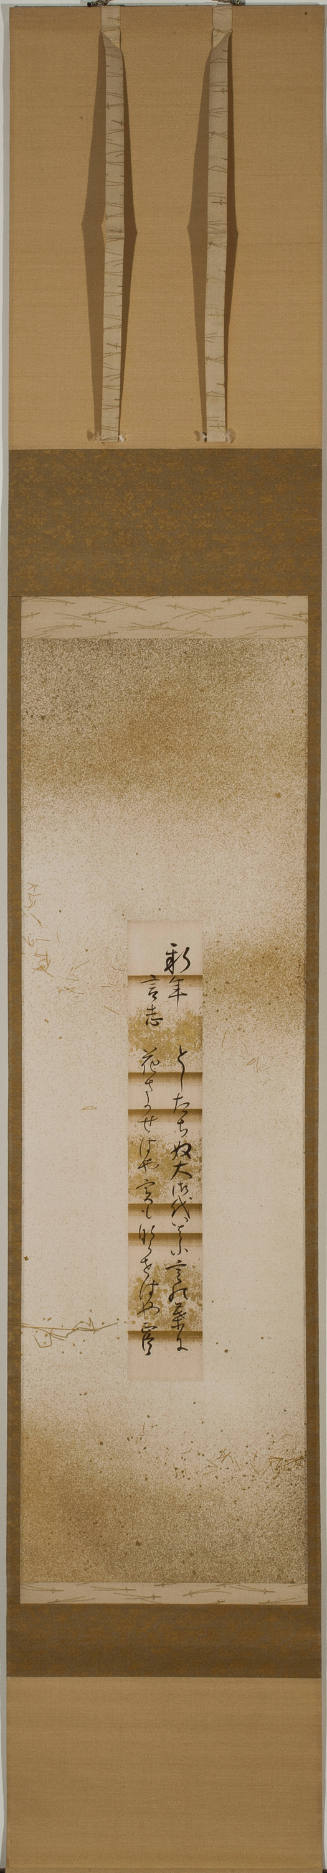 Mounted Tanzaku inscribed with Waka poem